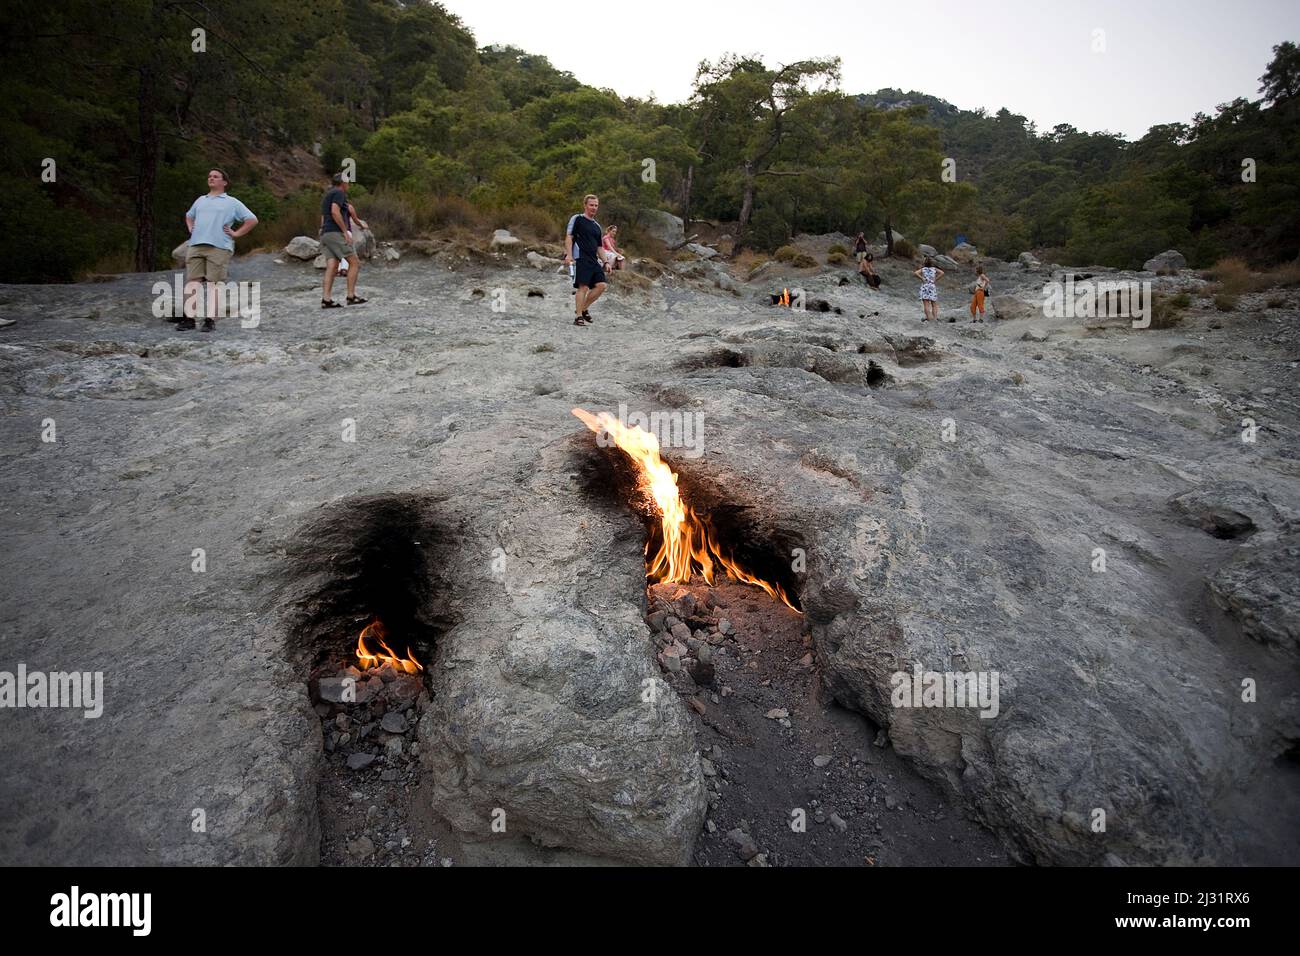 Chimaera flames, Mount Olympos, methane emissions which burning since the 4th century, Olympos national park, Cirali, Lykia, Turkey, Mediteranean sea Stock Photo